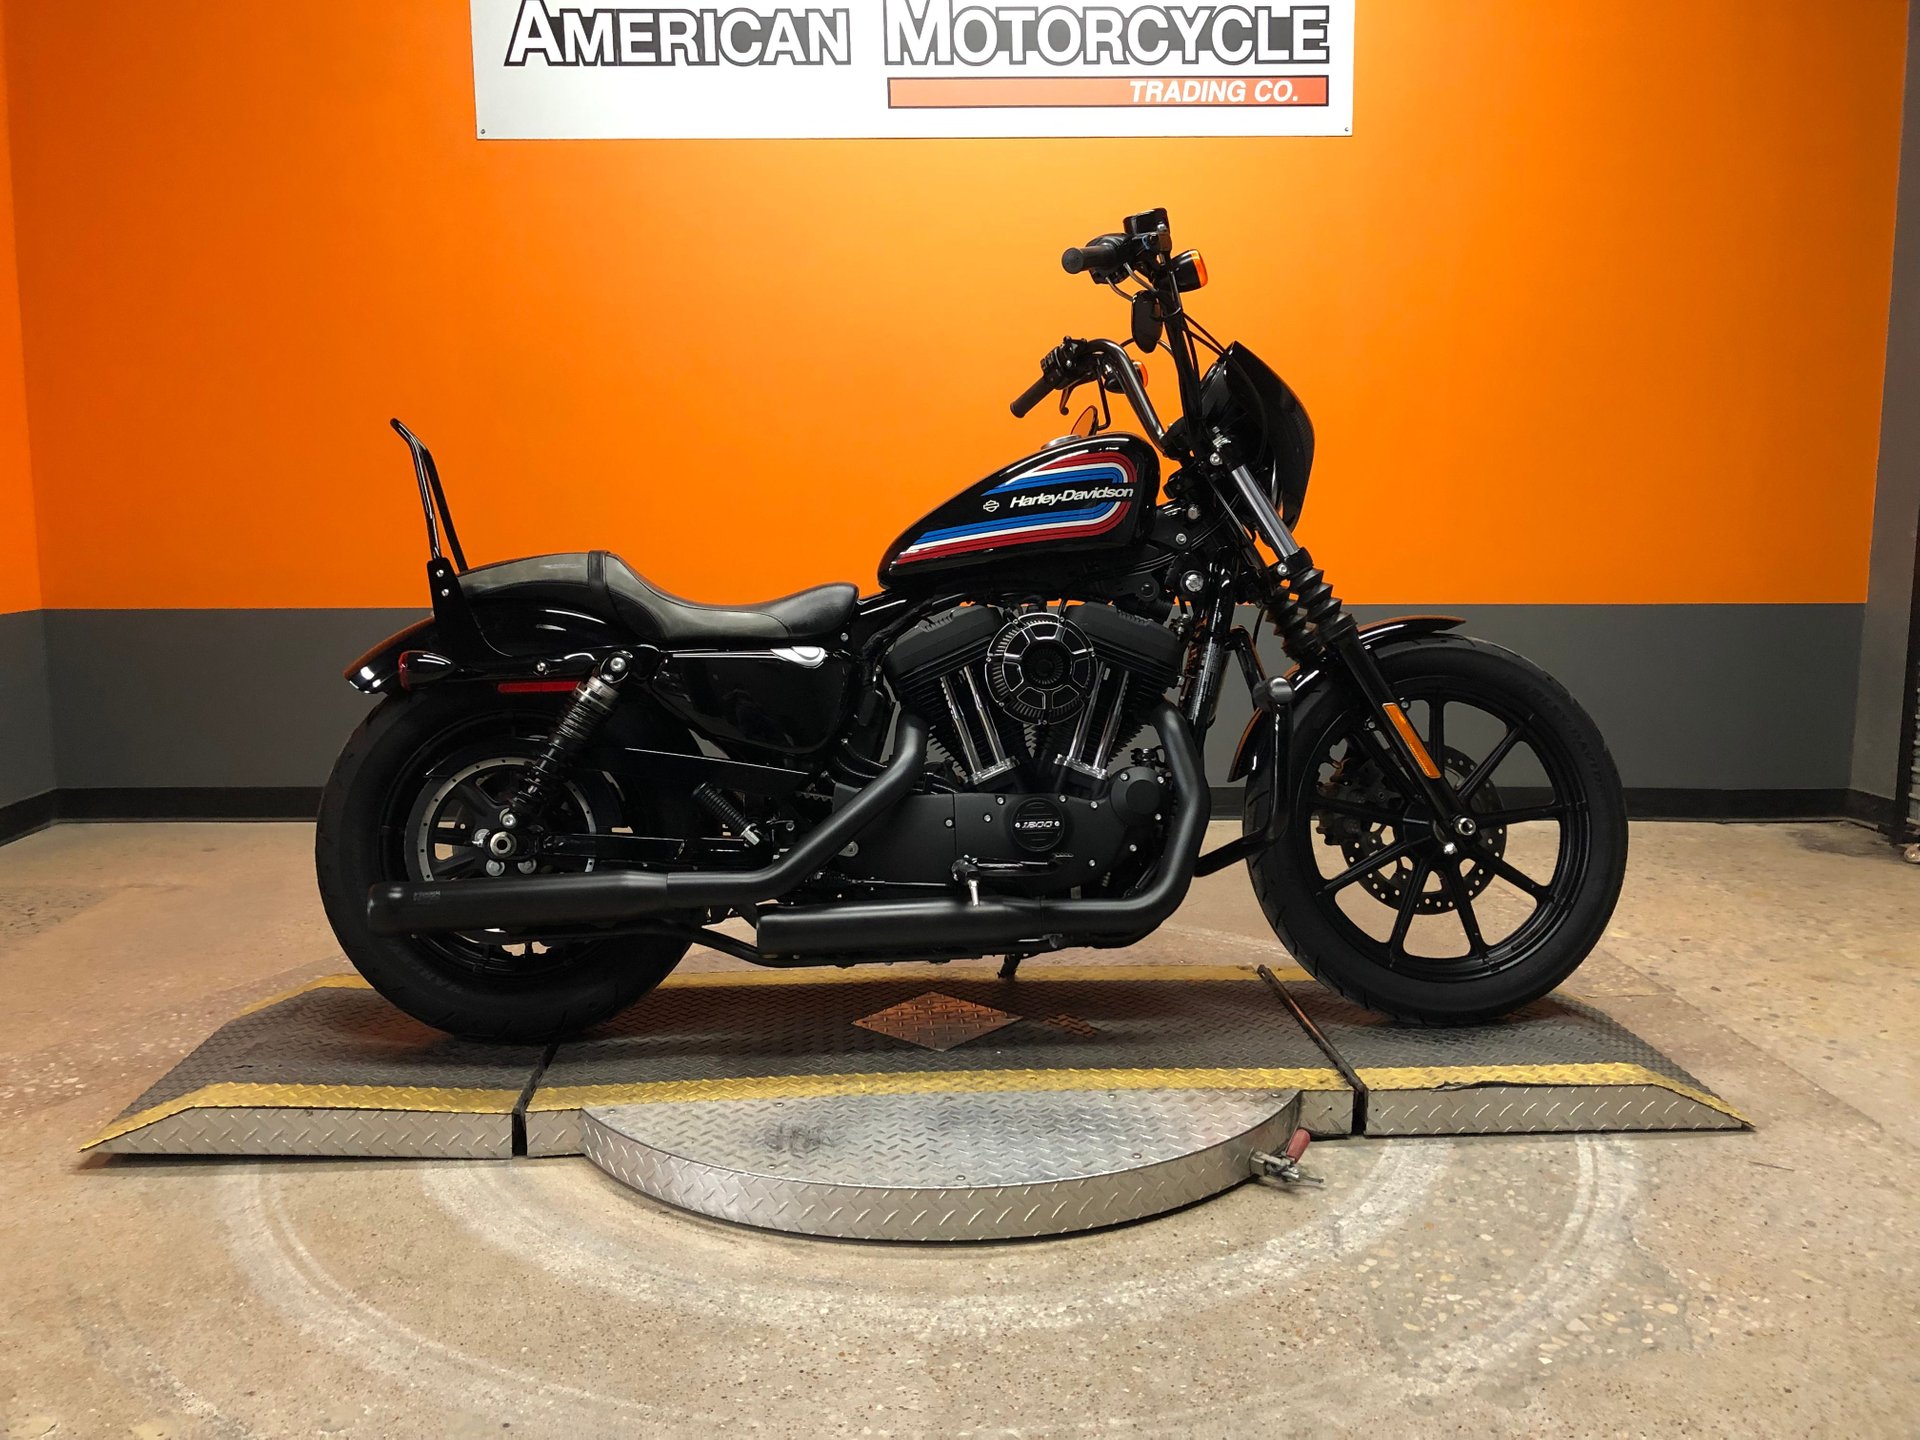 2020 Harley-Davidson Sportster 1200  American Motorcycle Trading Company -  Used Harley Davidson Motorcycles